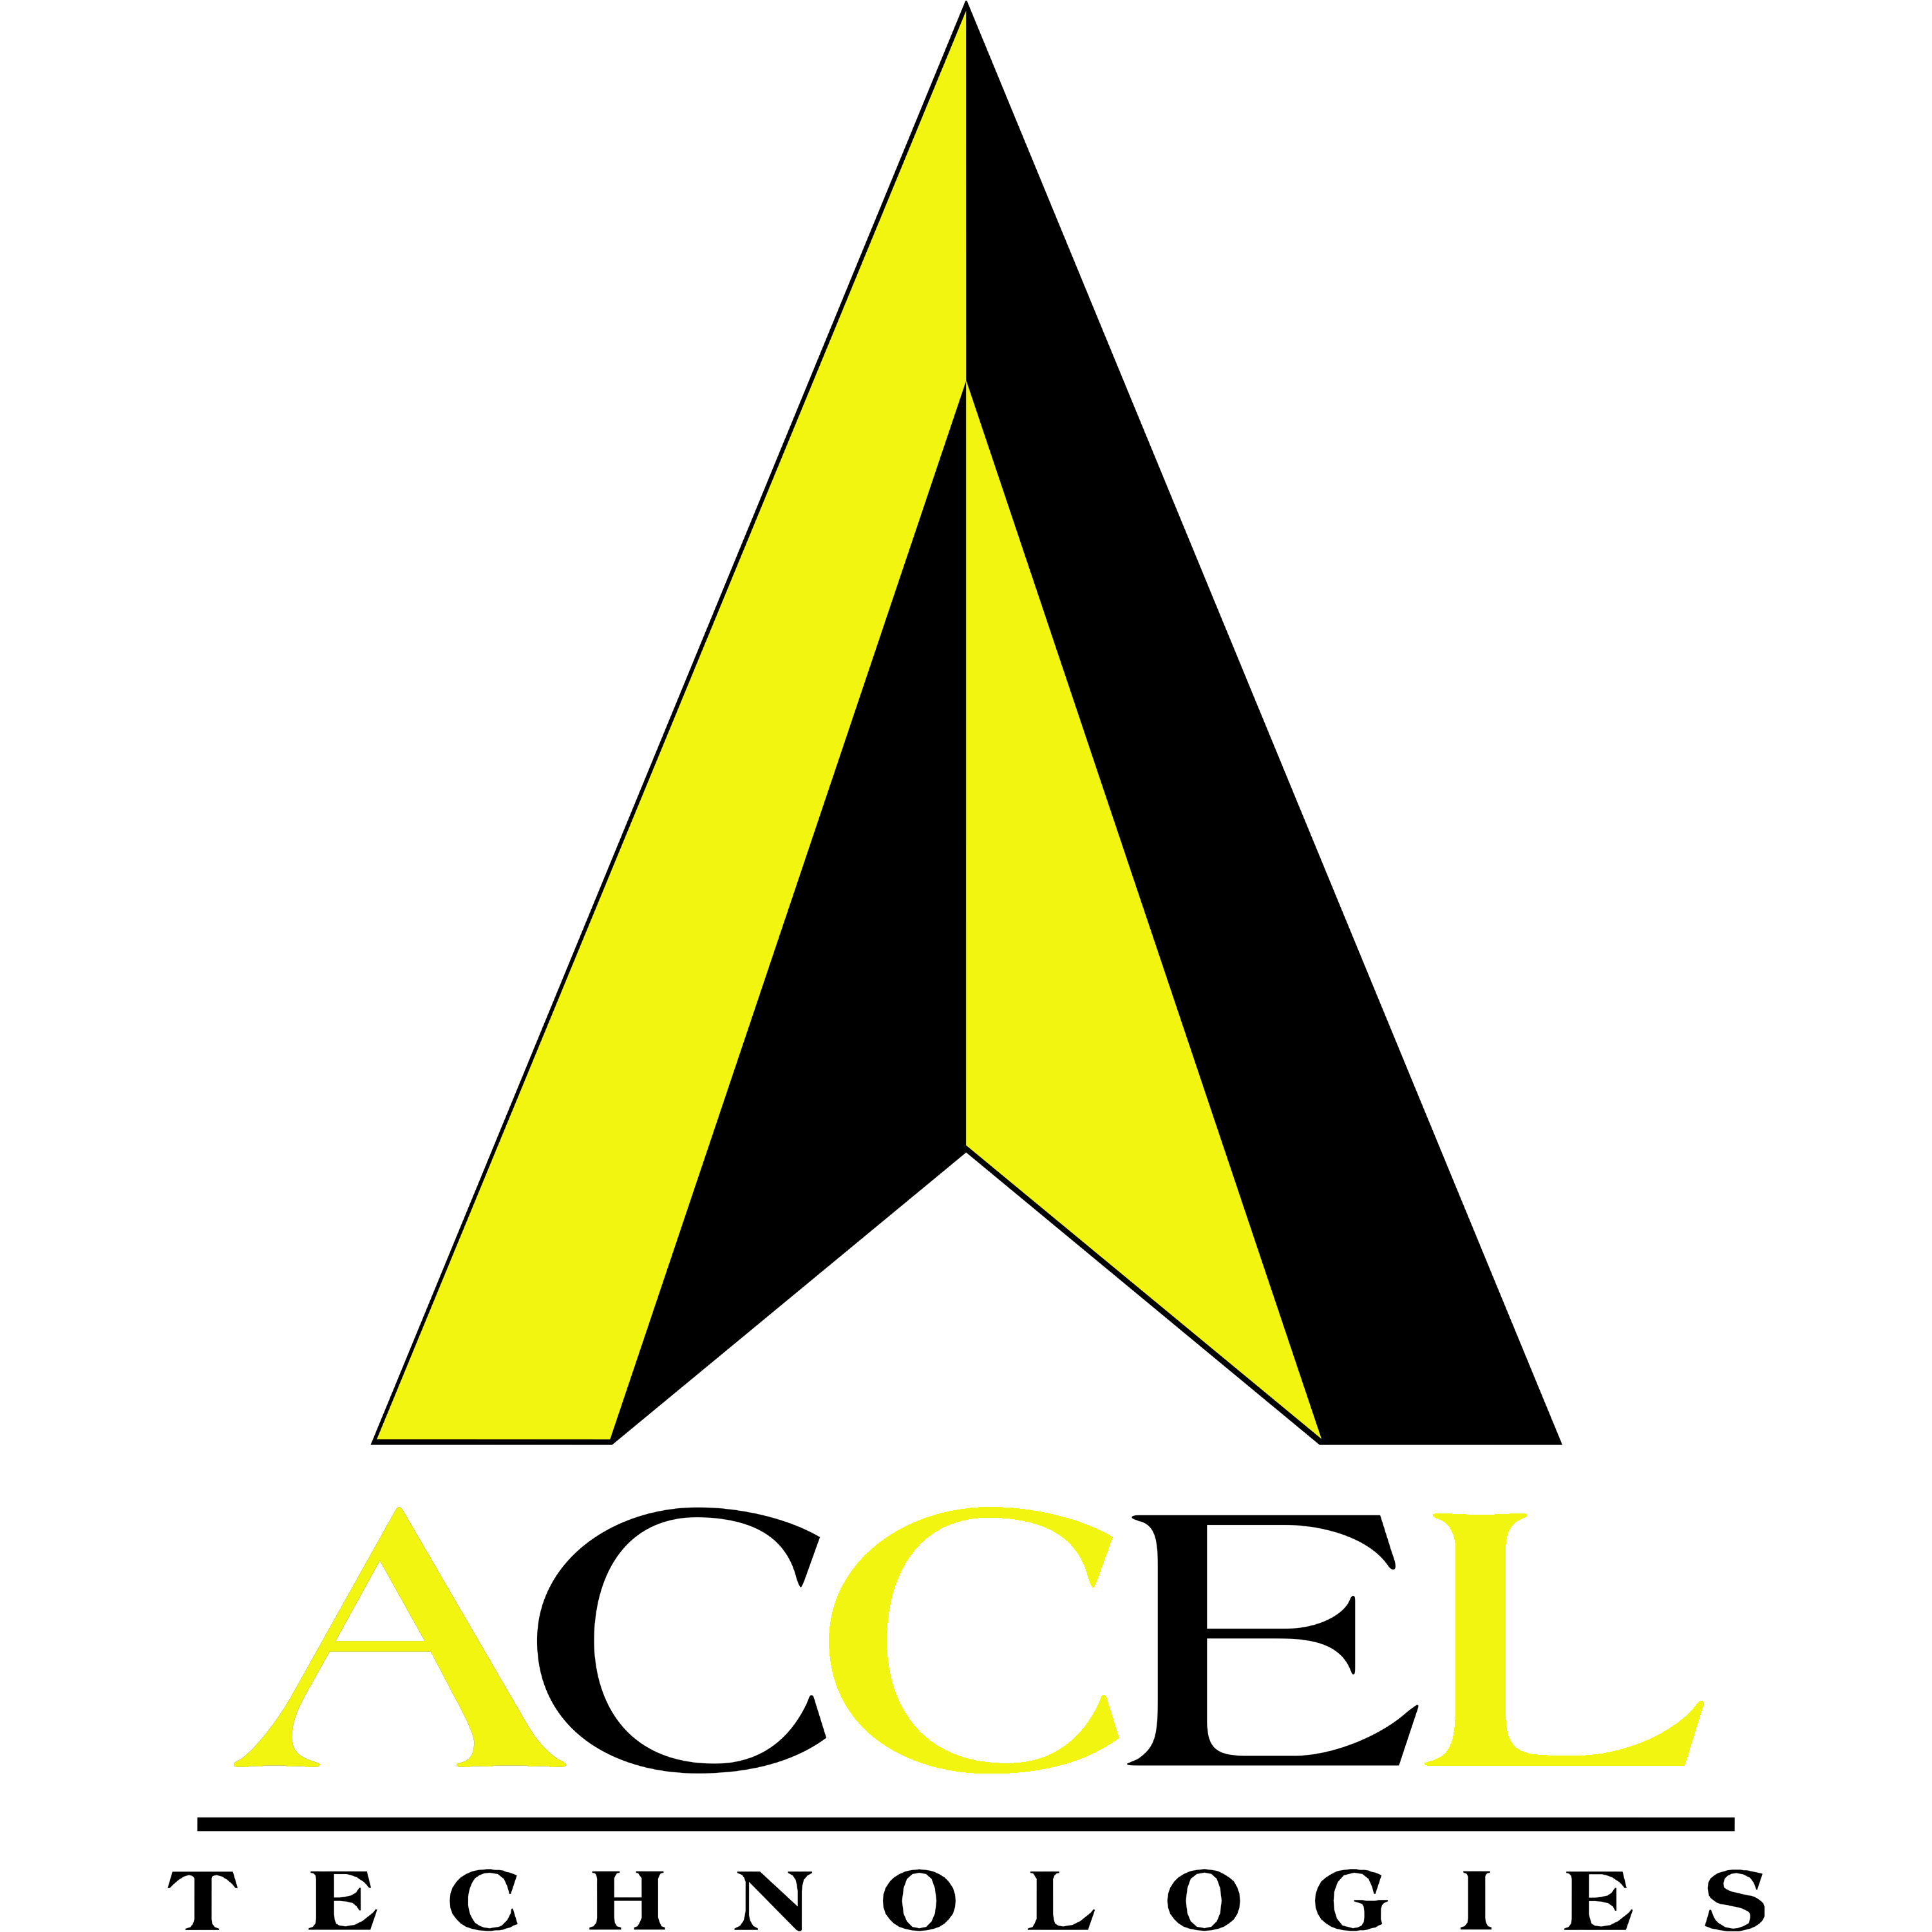 Accel Technologies Logo Transparent Picture